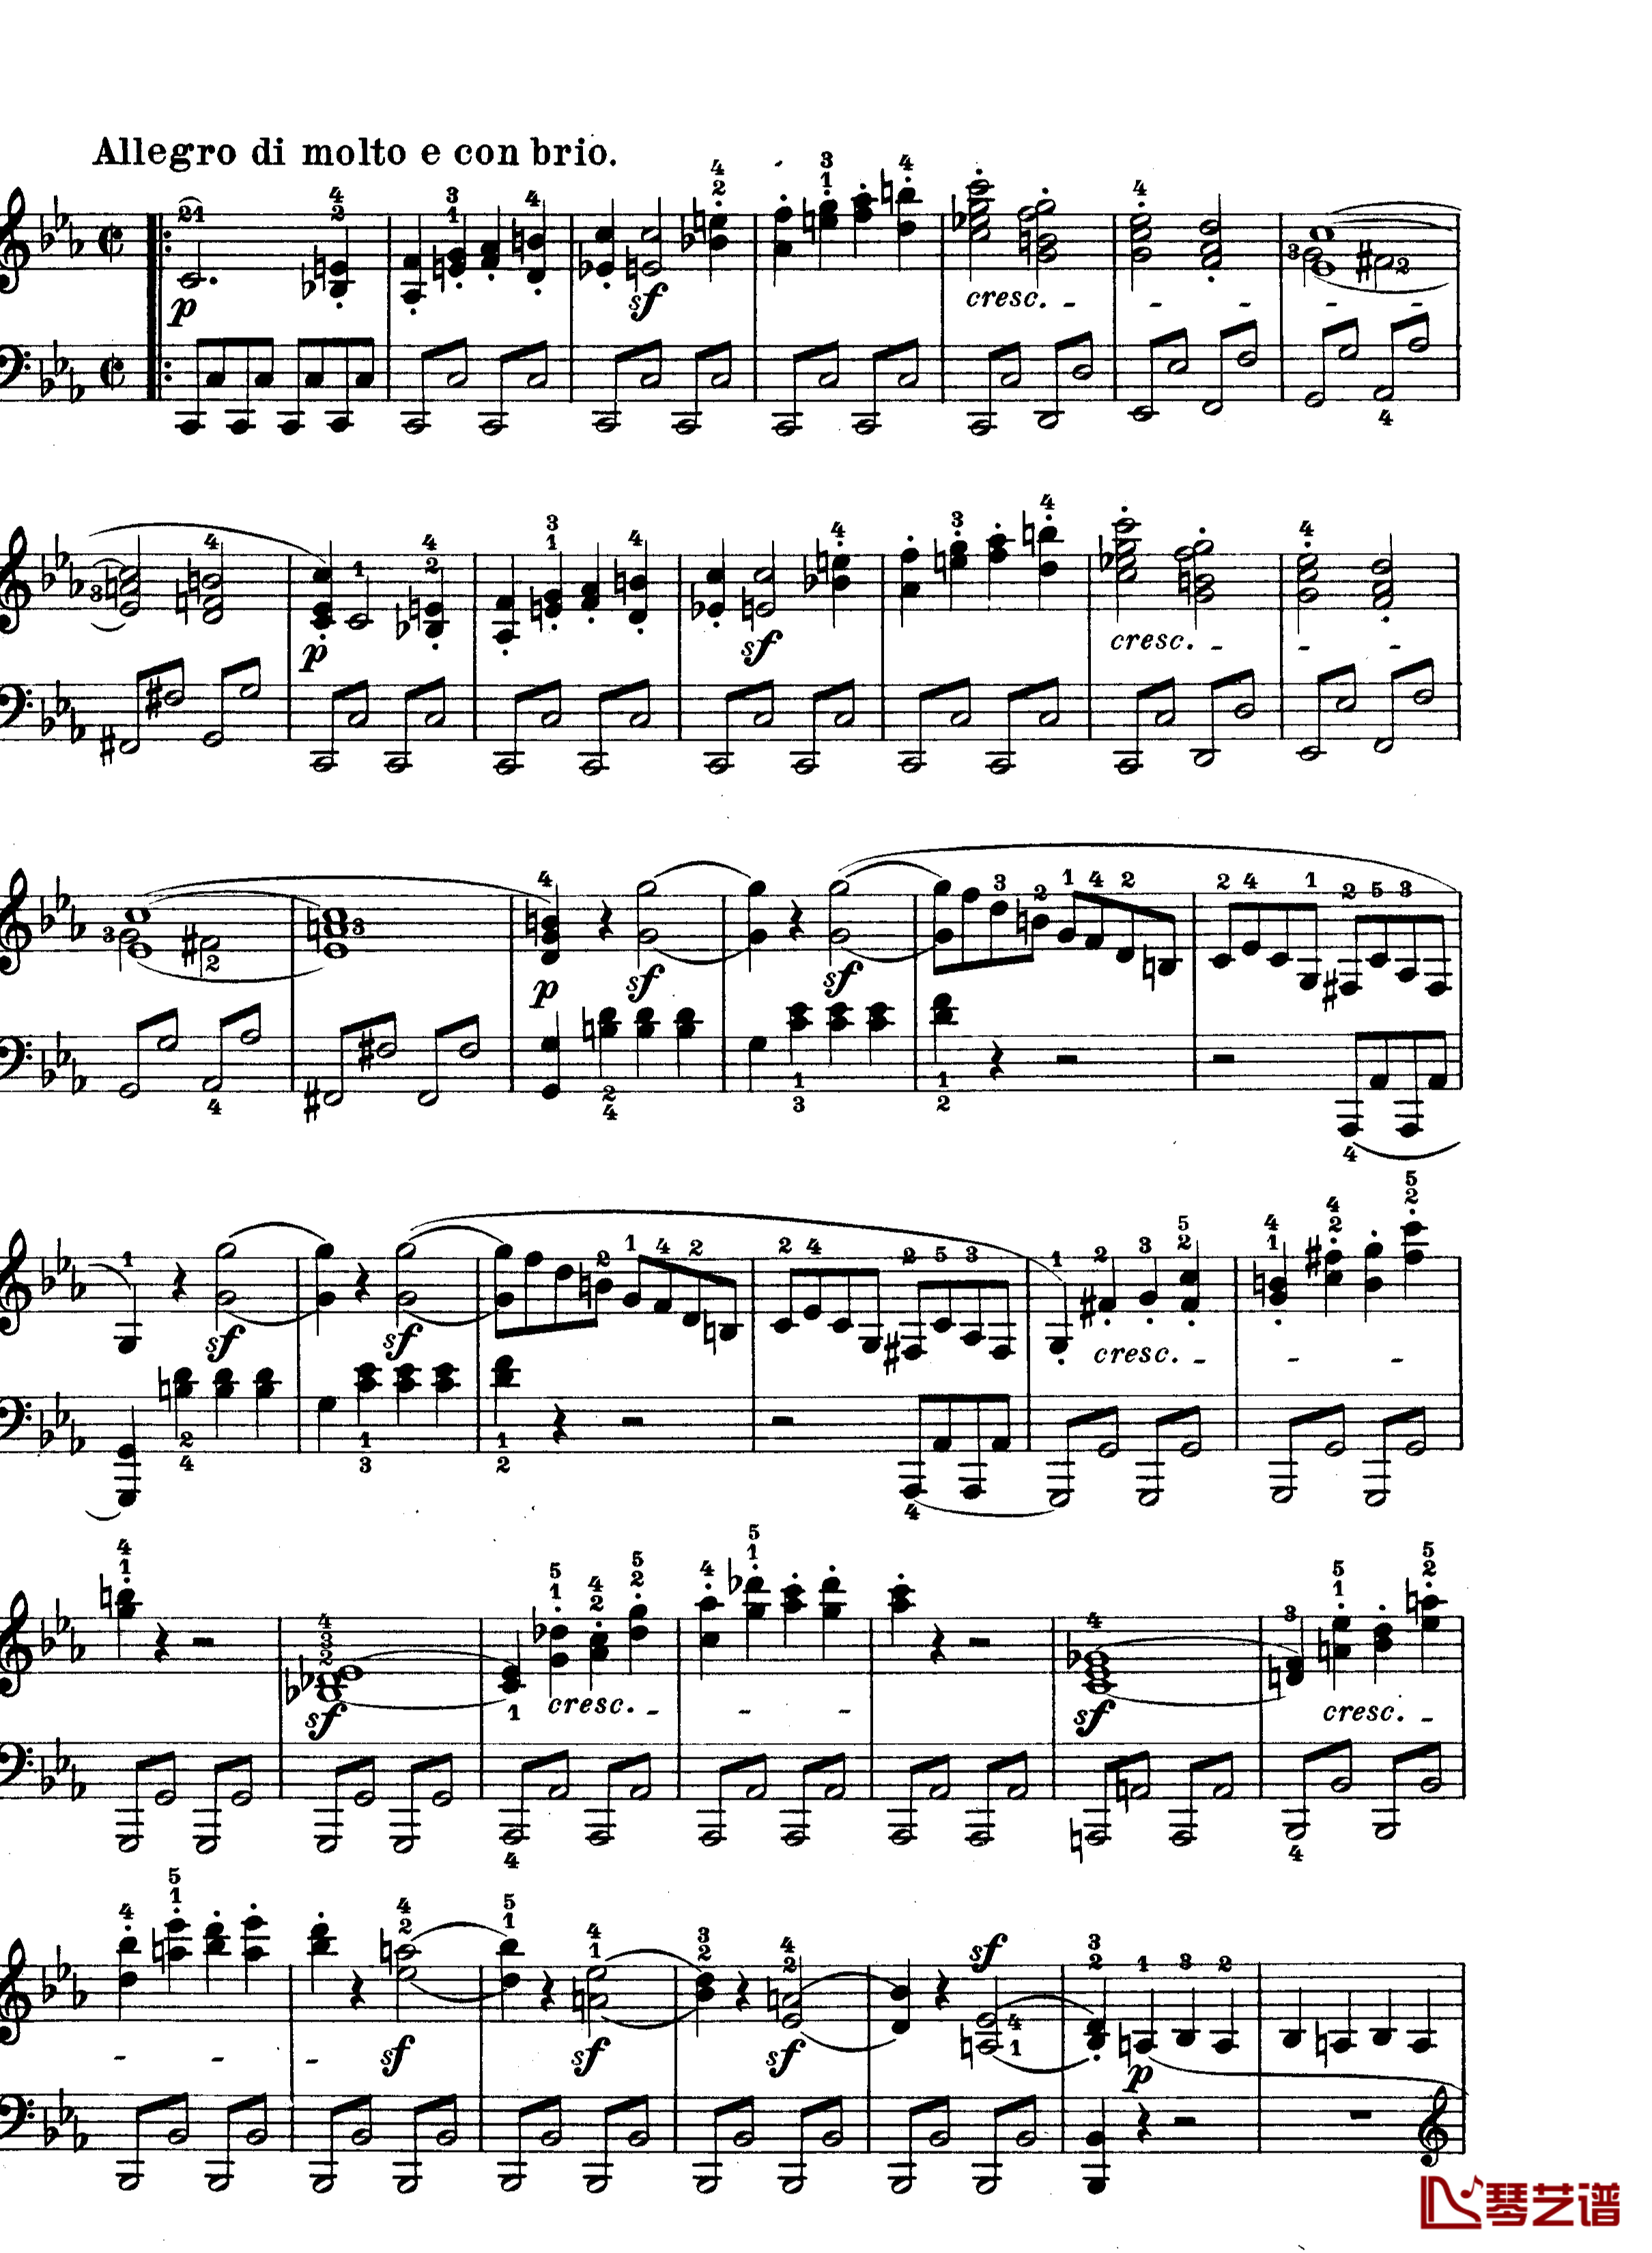 C小调第八琴奏鸣曲钢琴谱-悲怆-贝多芬-beethoven